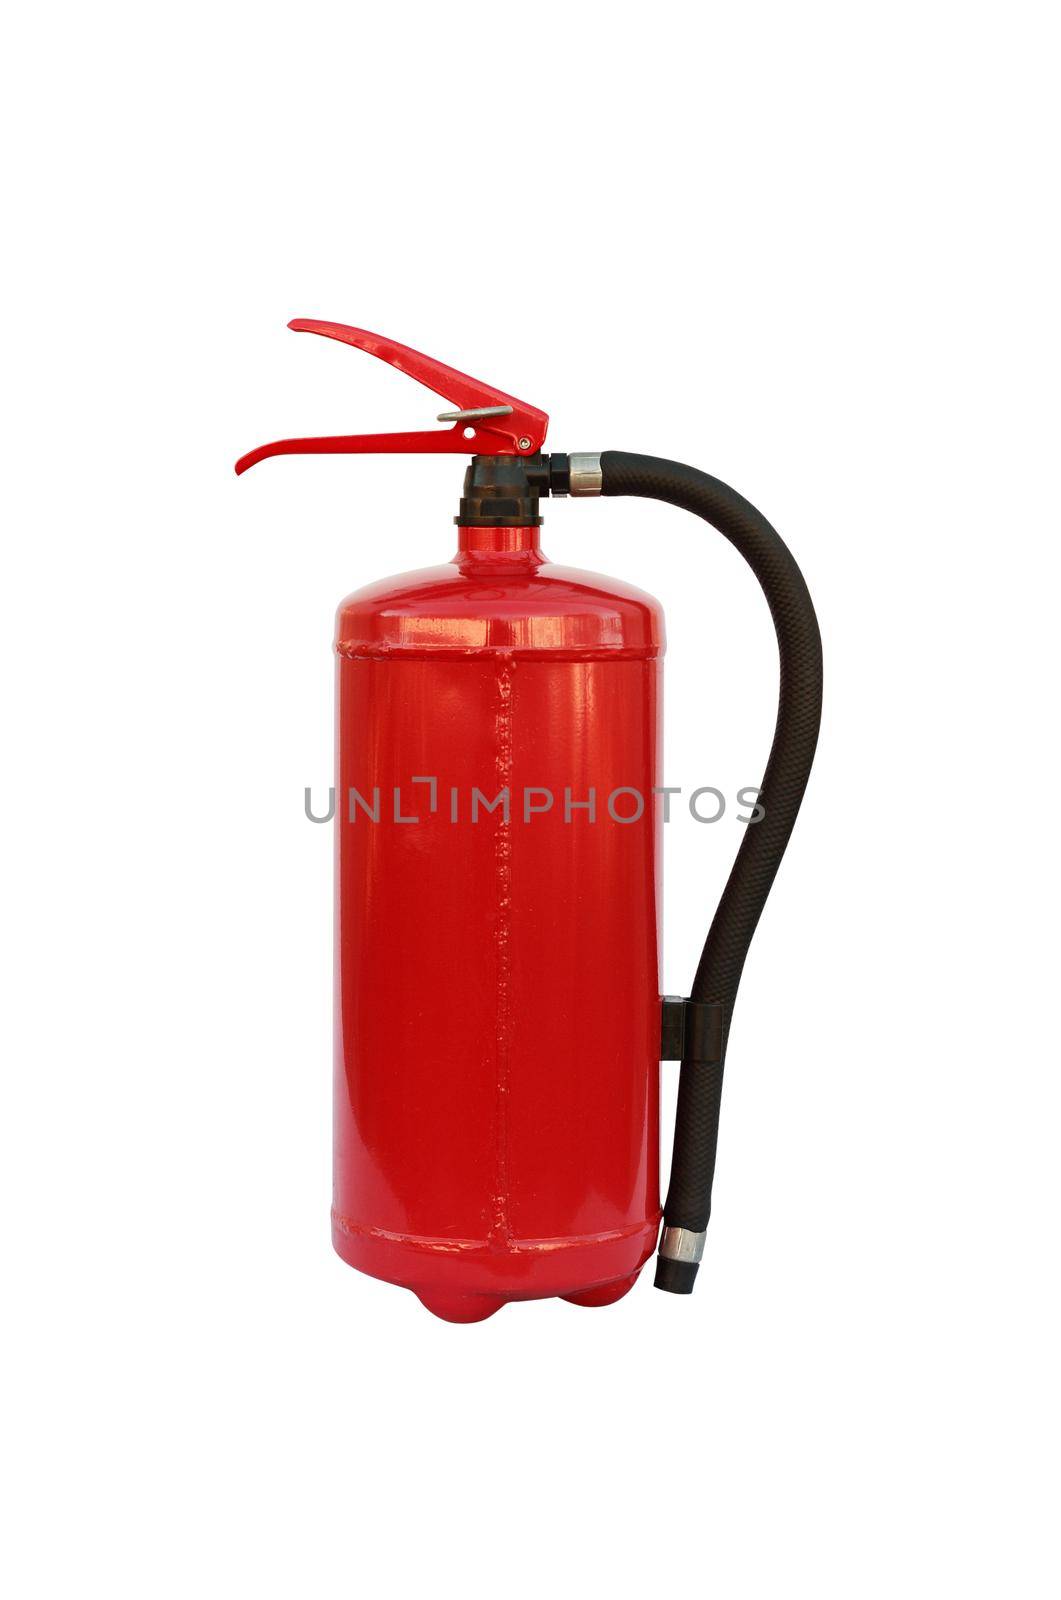 Red Fire Extinguisher by kvkirillov